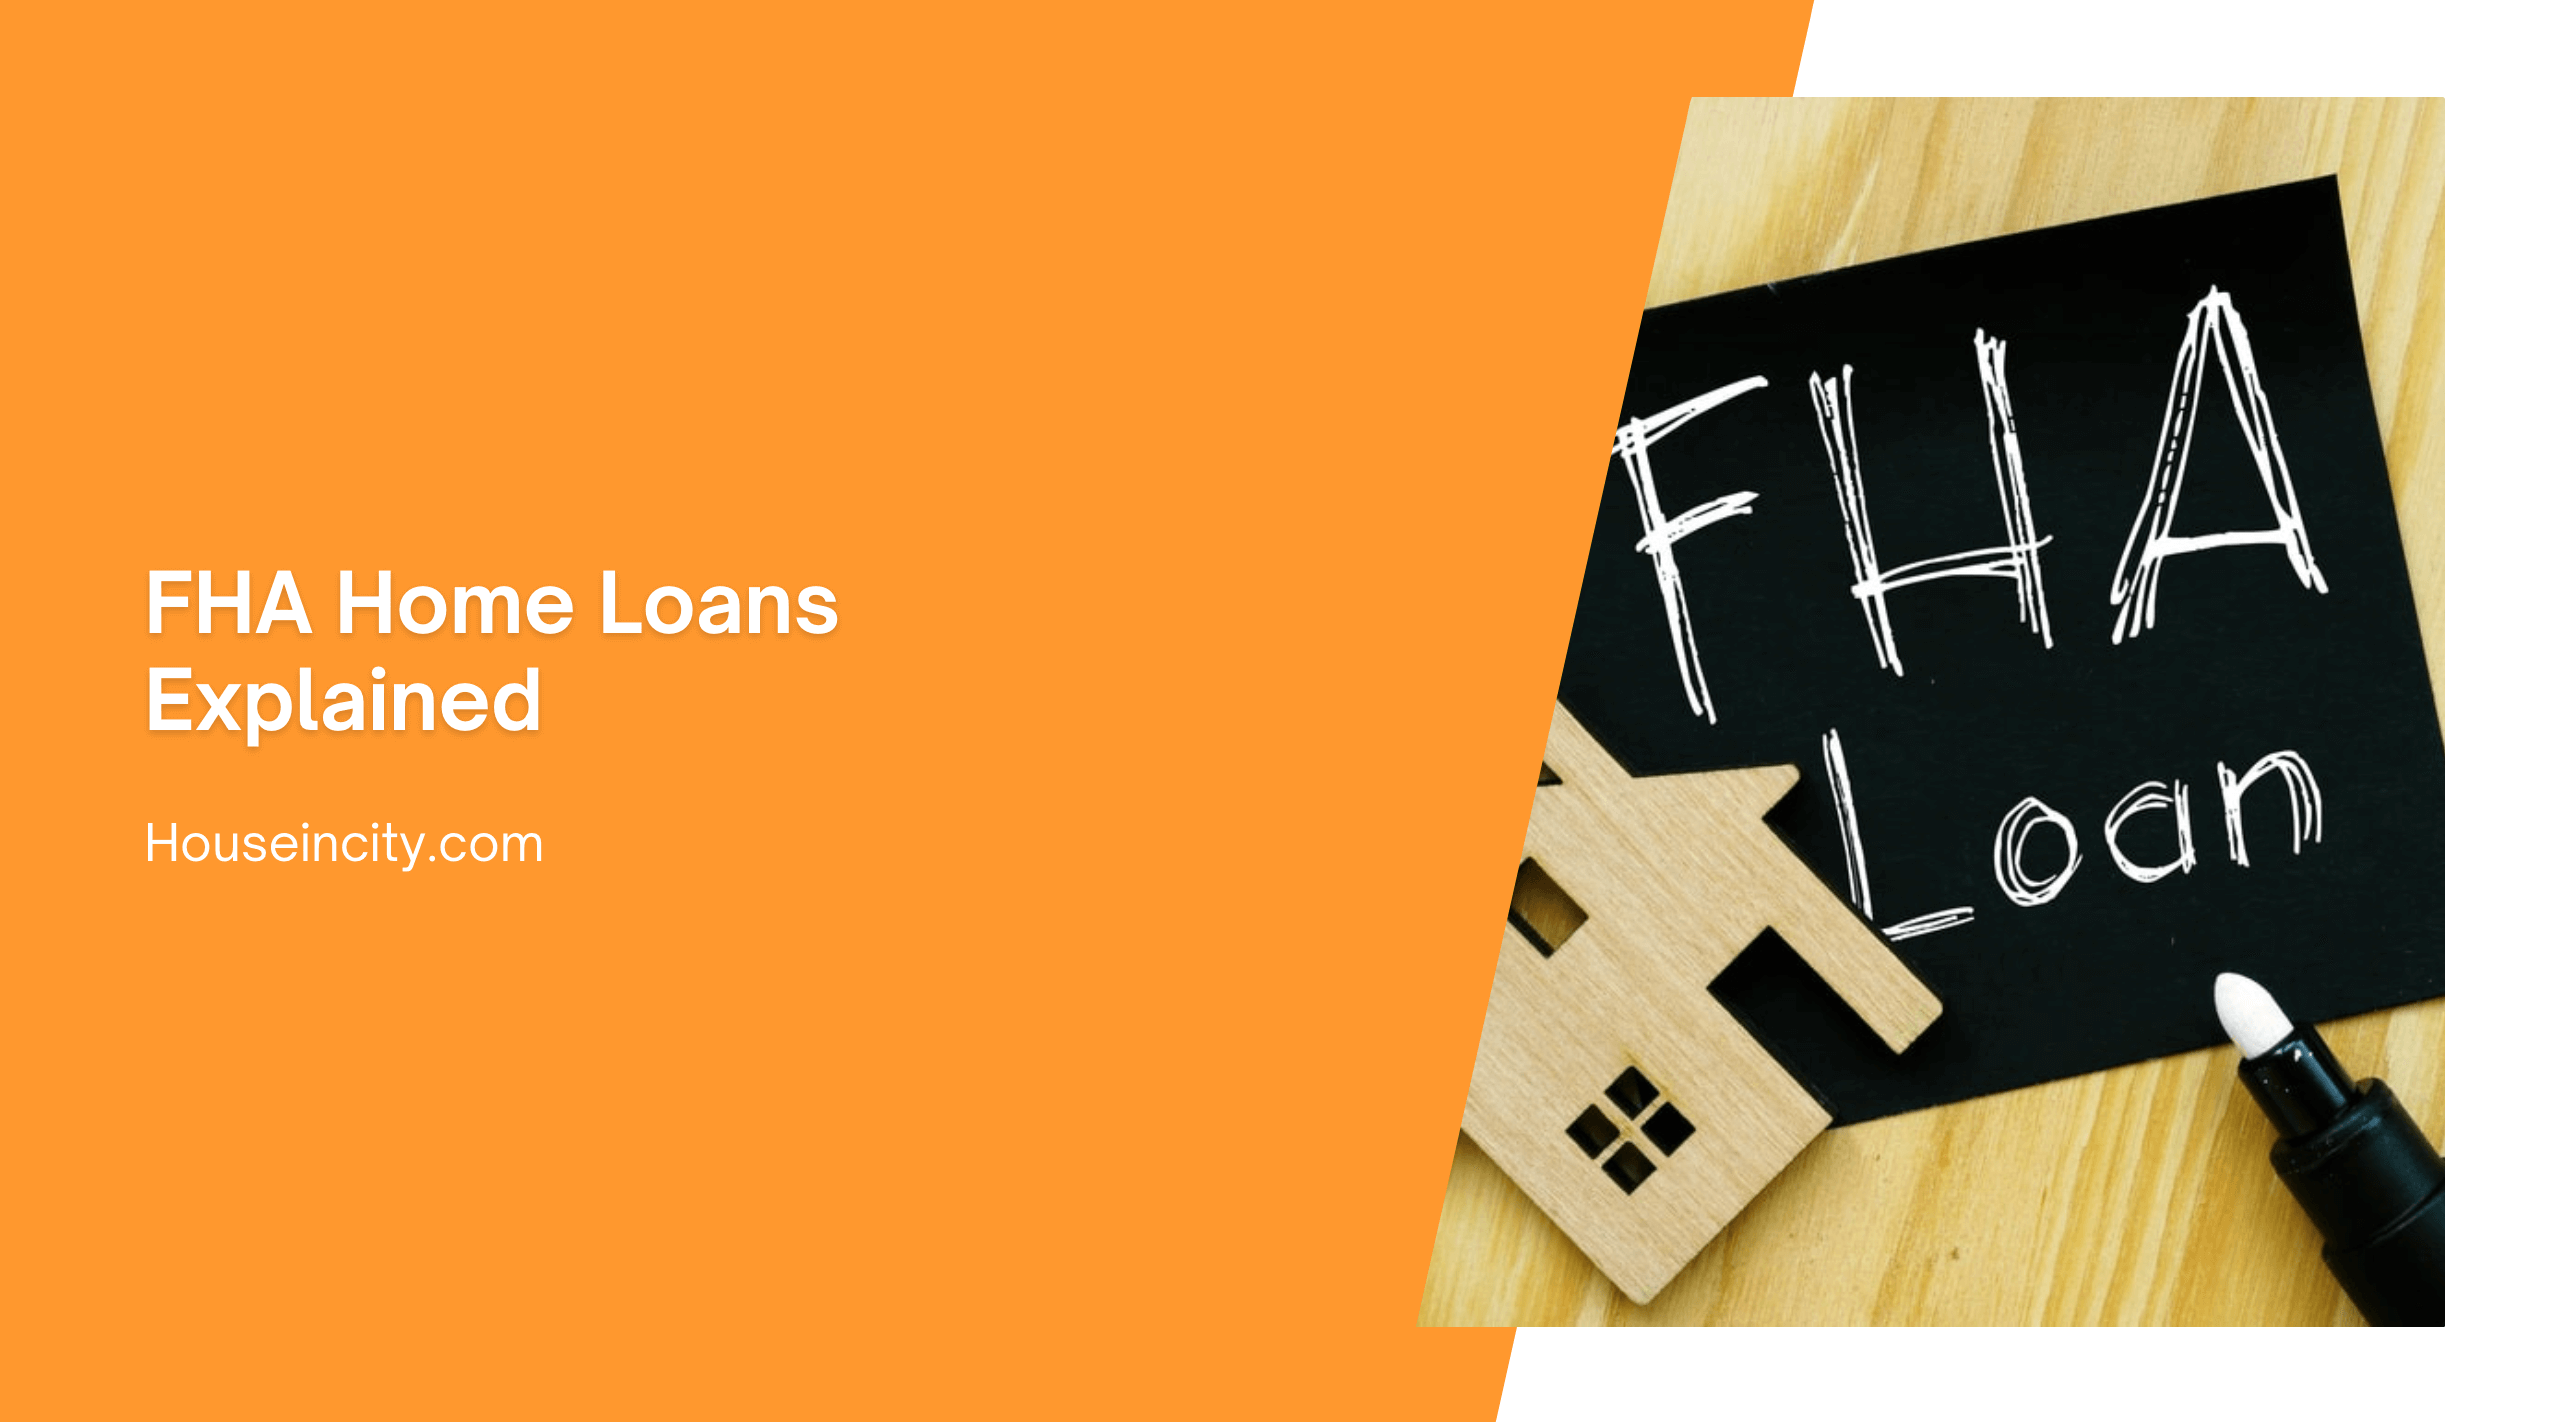 FHA Home Loans Explained